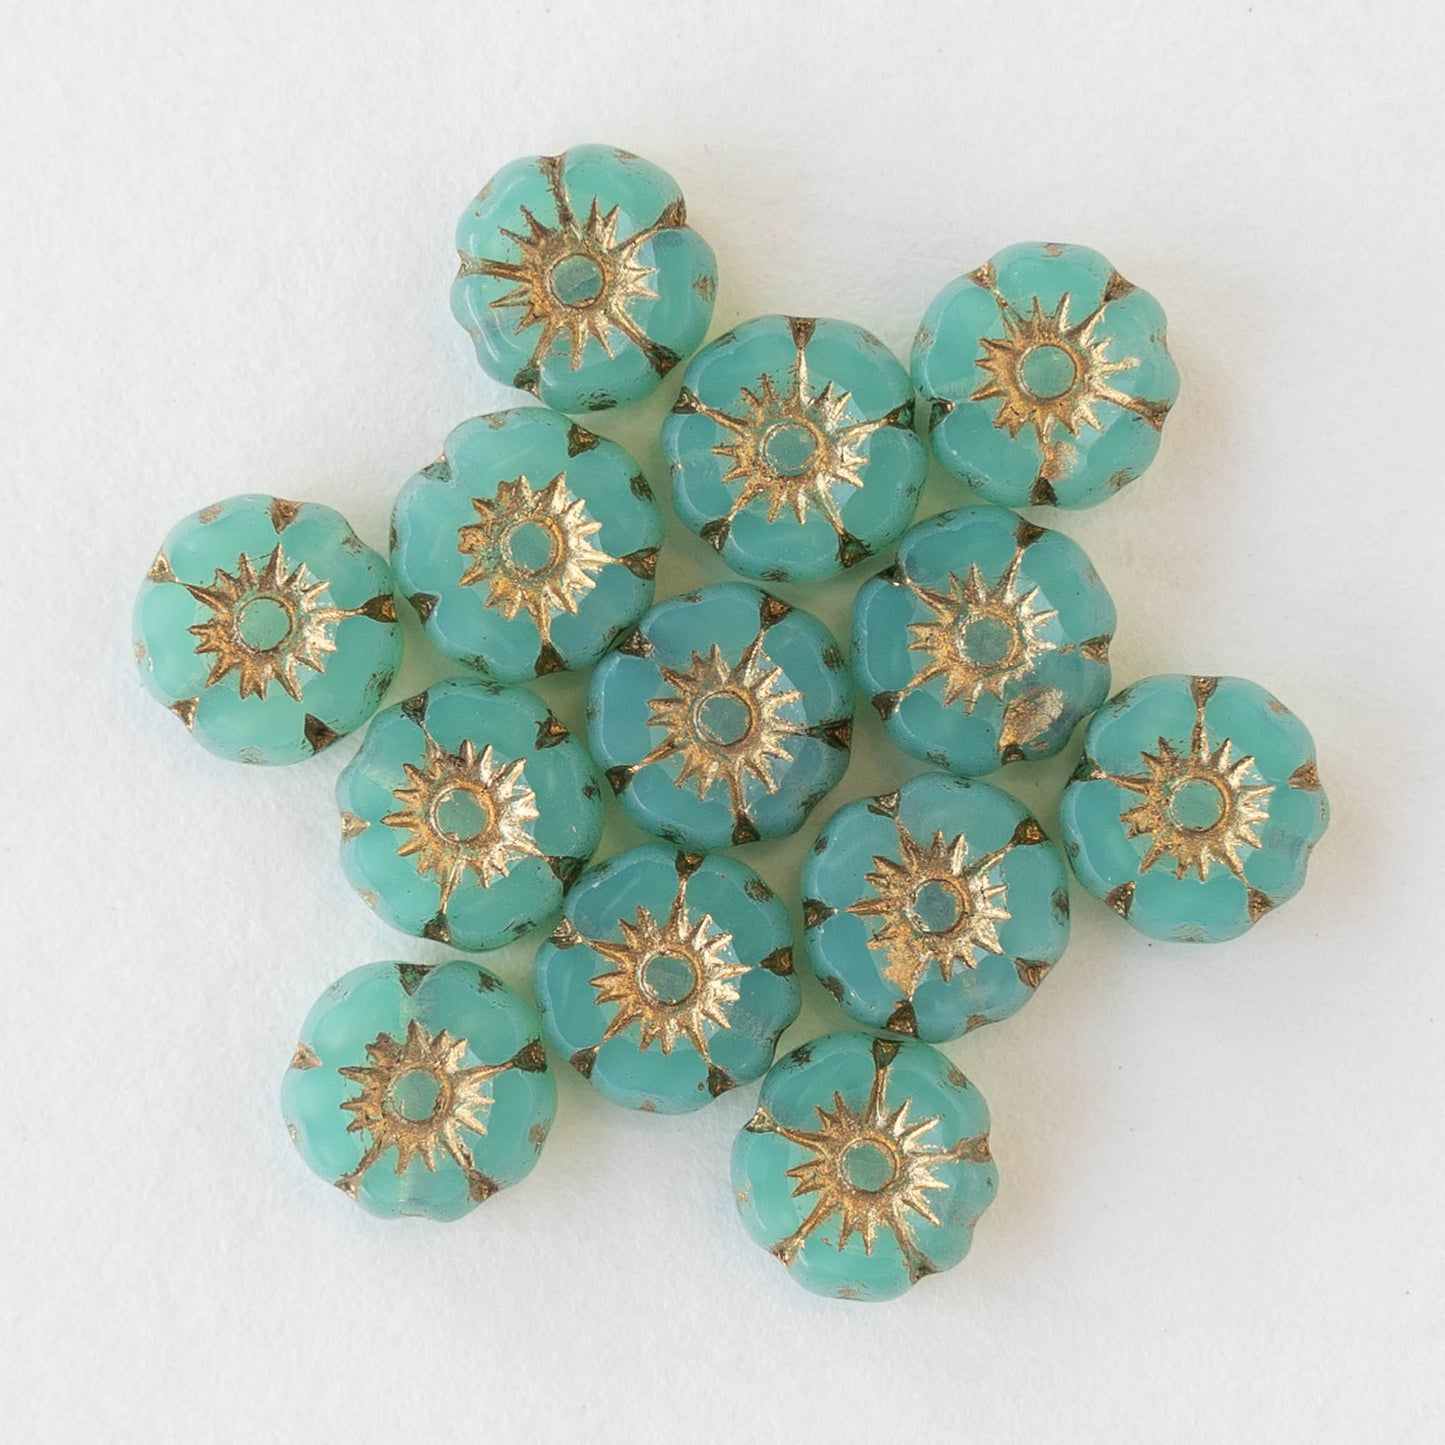 7mm Glass Flower Beads - Seafoam Opaline - 12 Beads